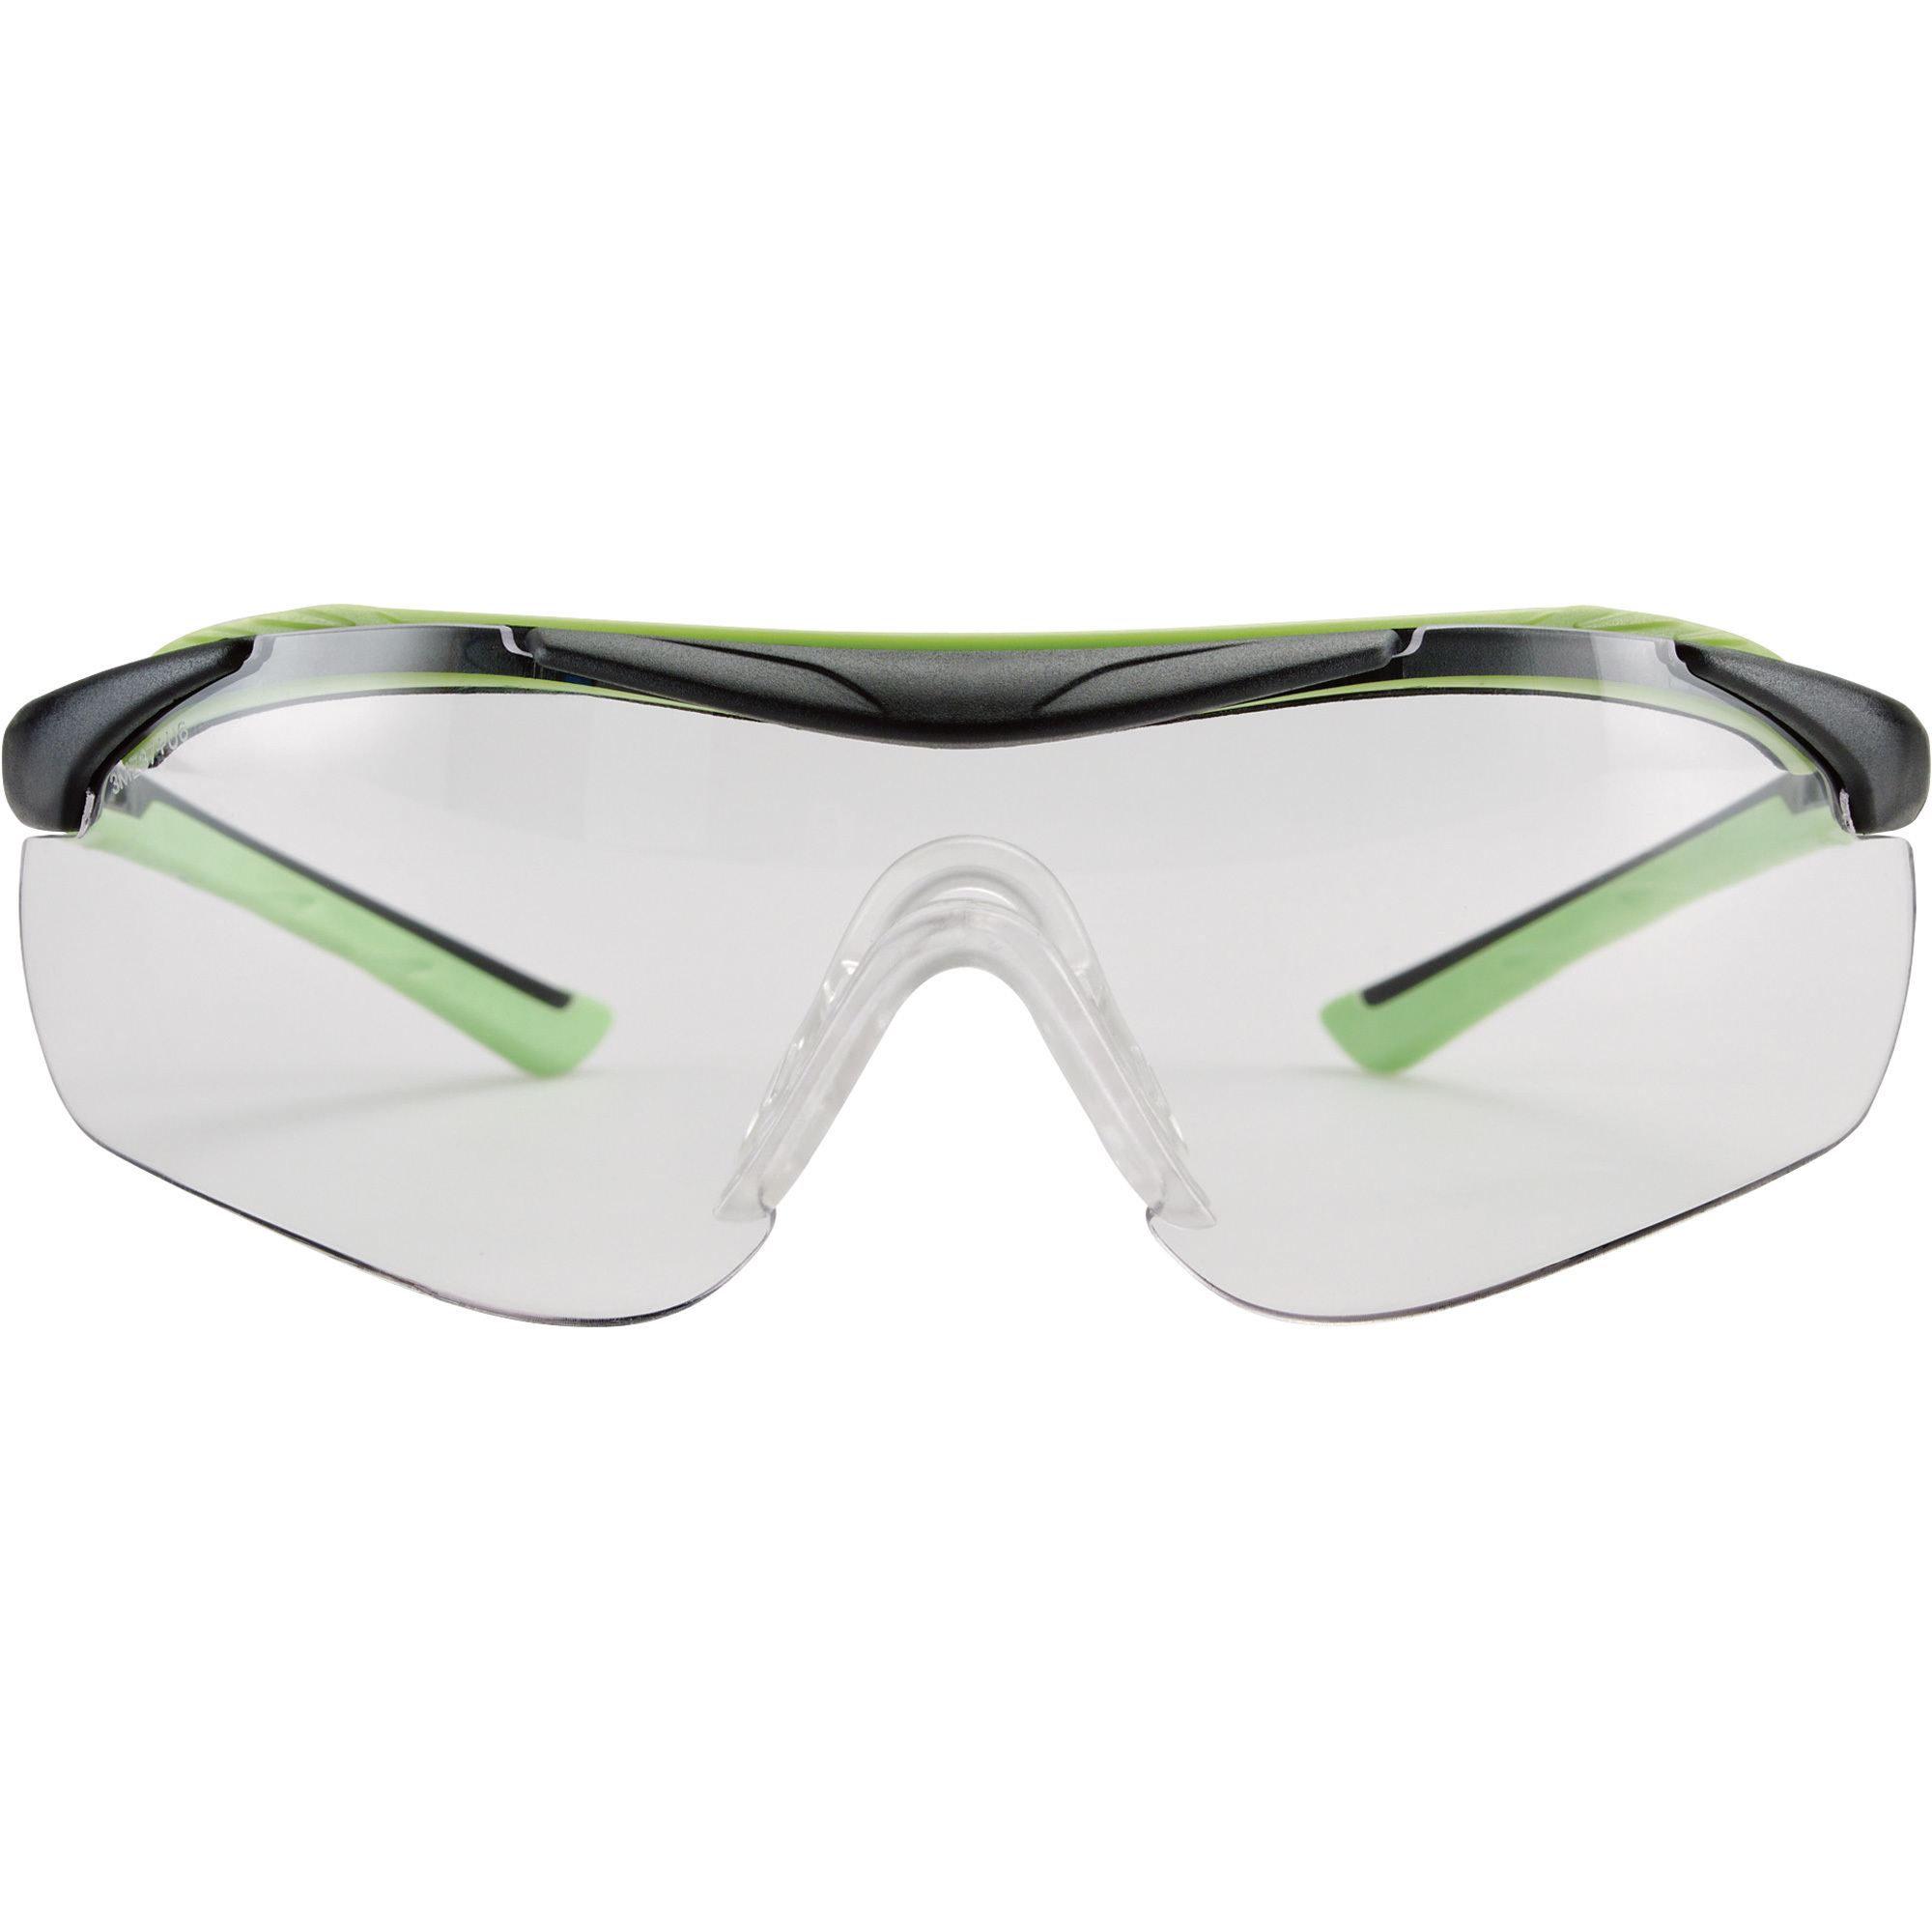 3M Sport Design Performance Safety Glasses, Black/Green Frame, Clear Lens, Model 47100-WZ4